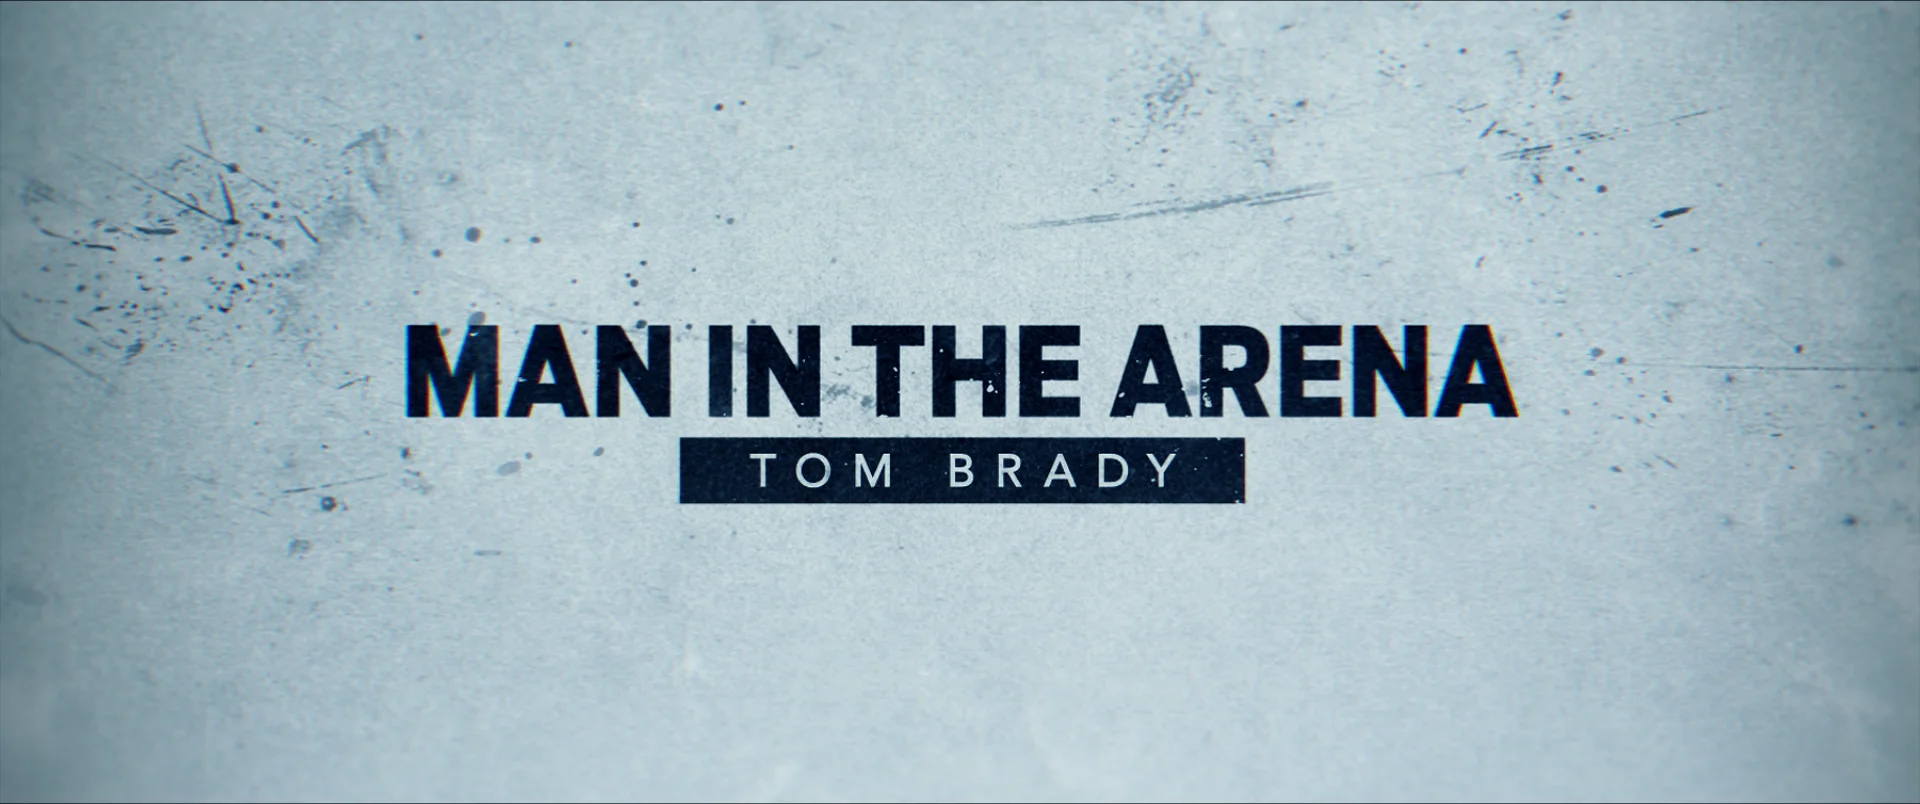 MAN IN THE ARENA : TOM BRADY on Vimeo